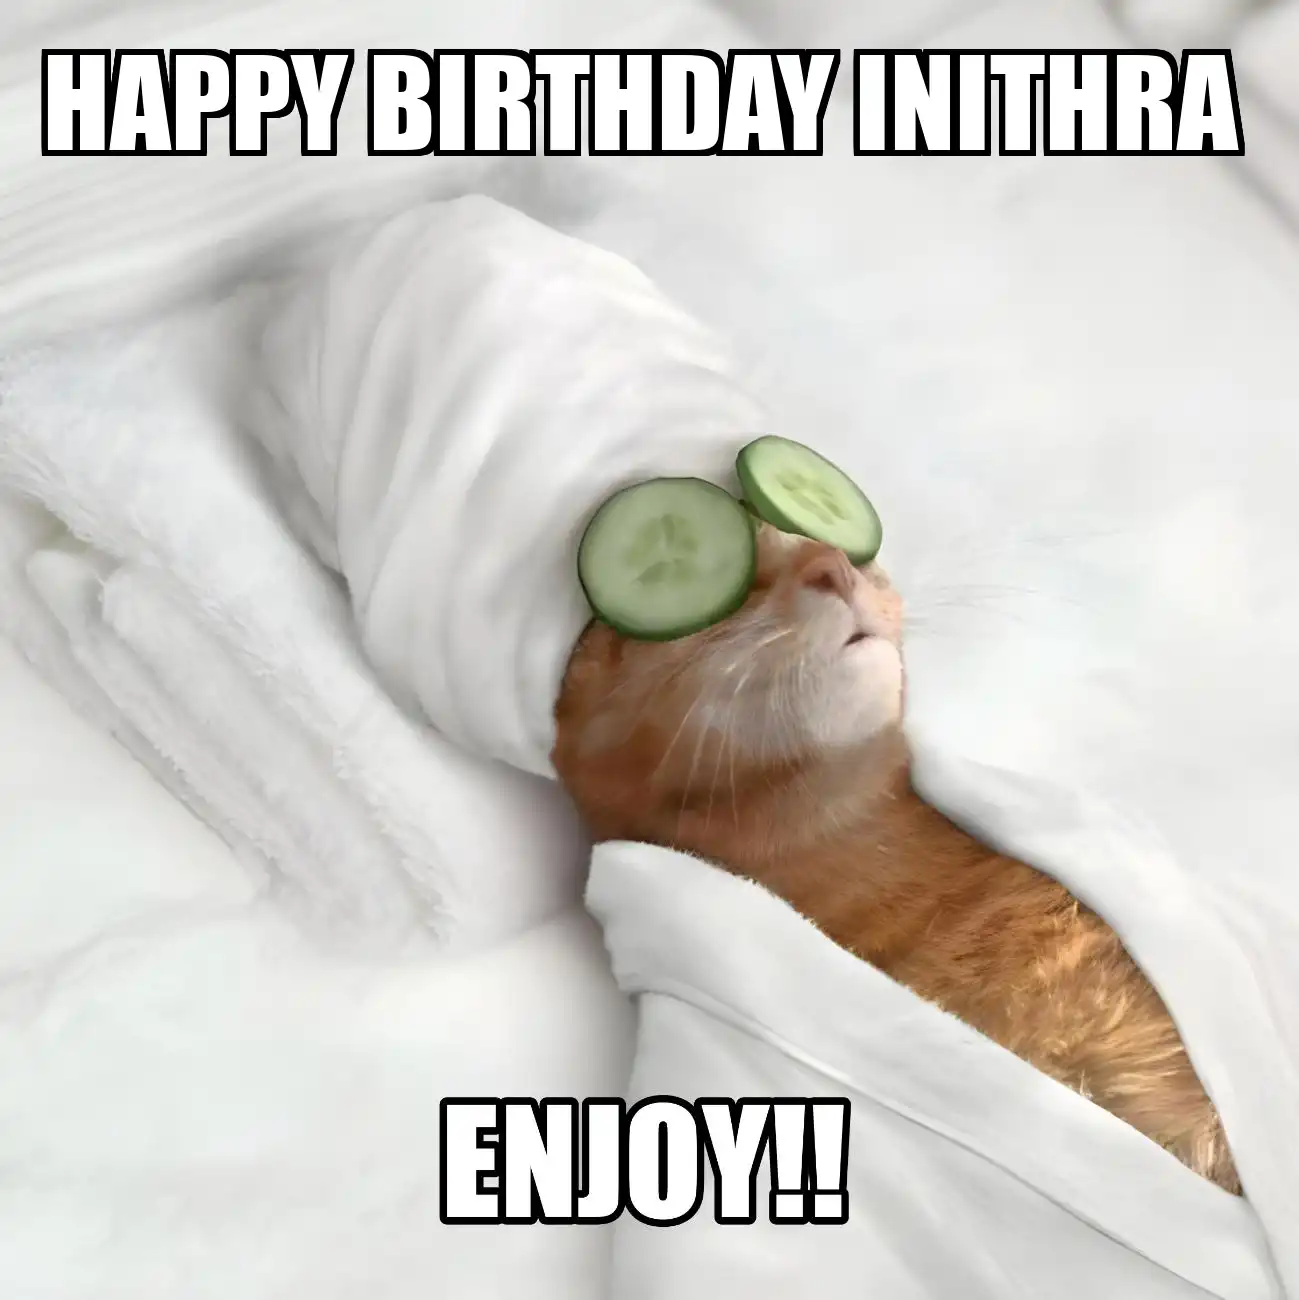 Happy Birthday Inithra Enjoy Cat Meme